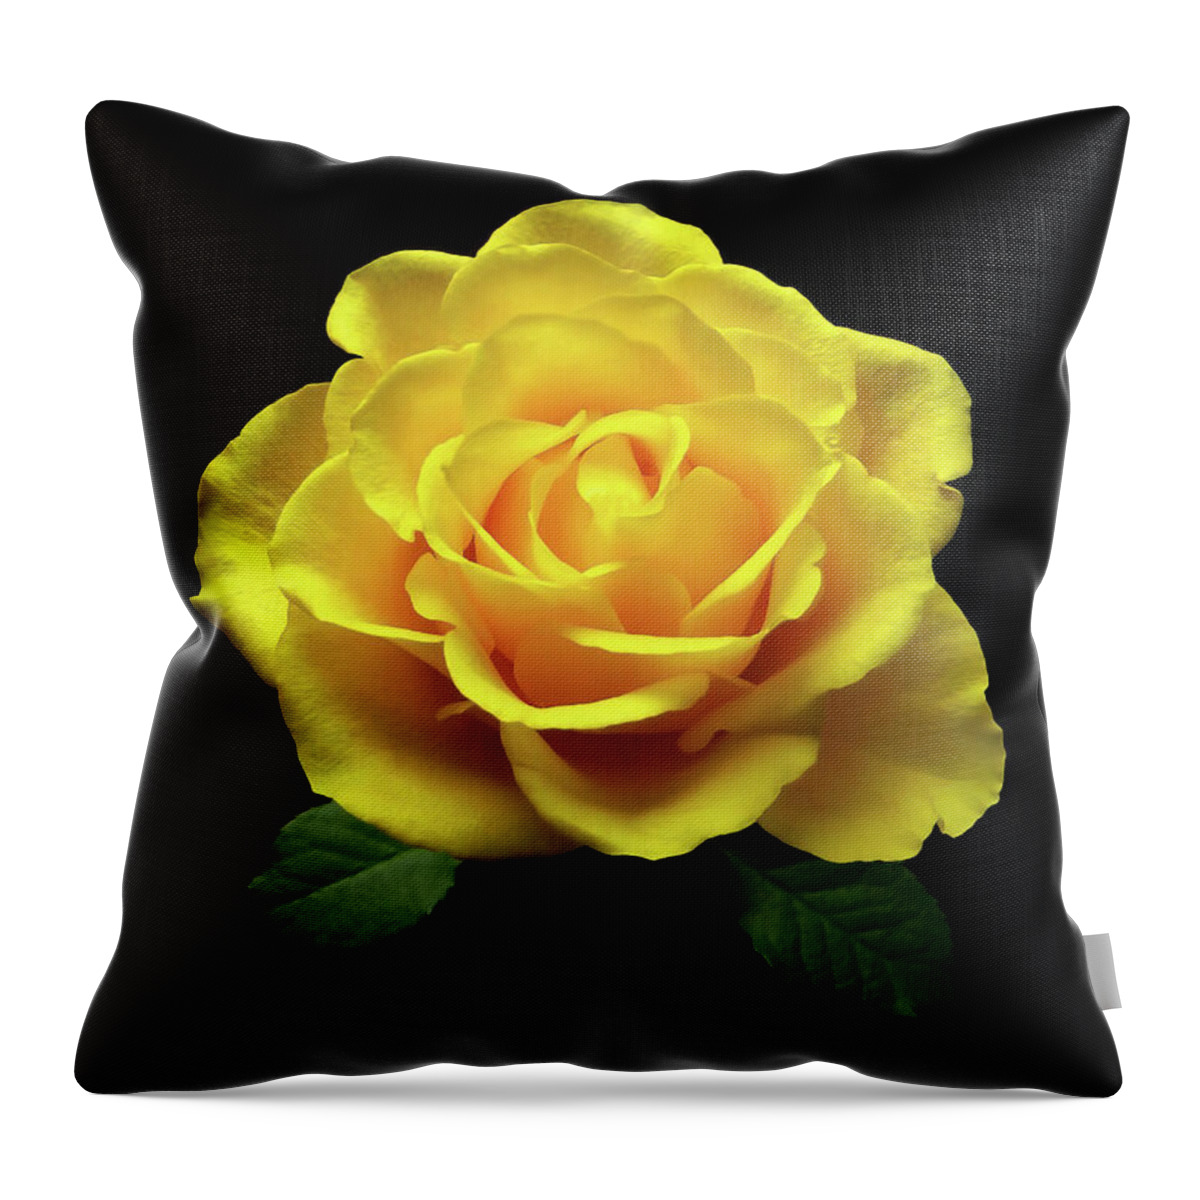 Rose Throw Pillow featuring the photograph Yellow Rose 6 by Johanna Hurmerinta